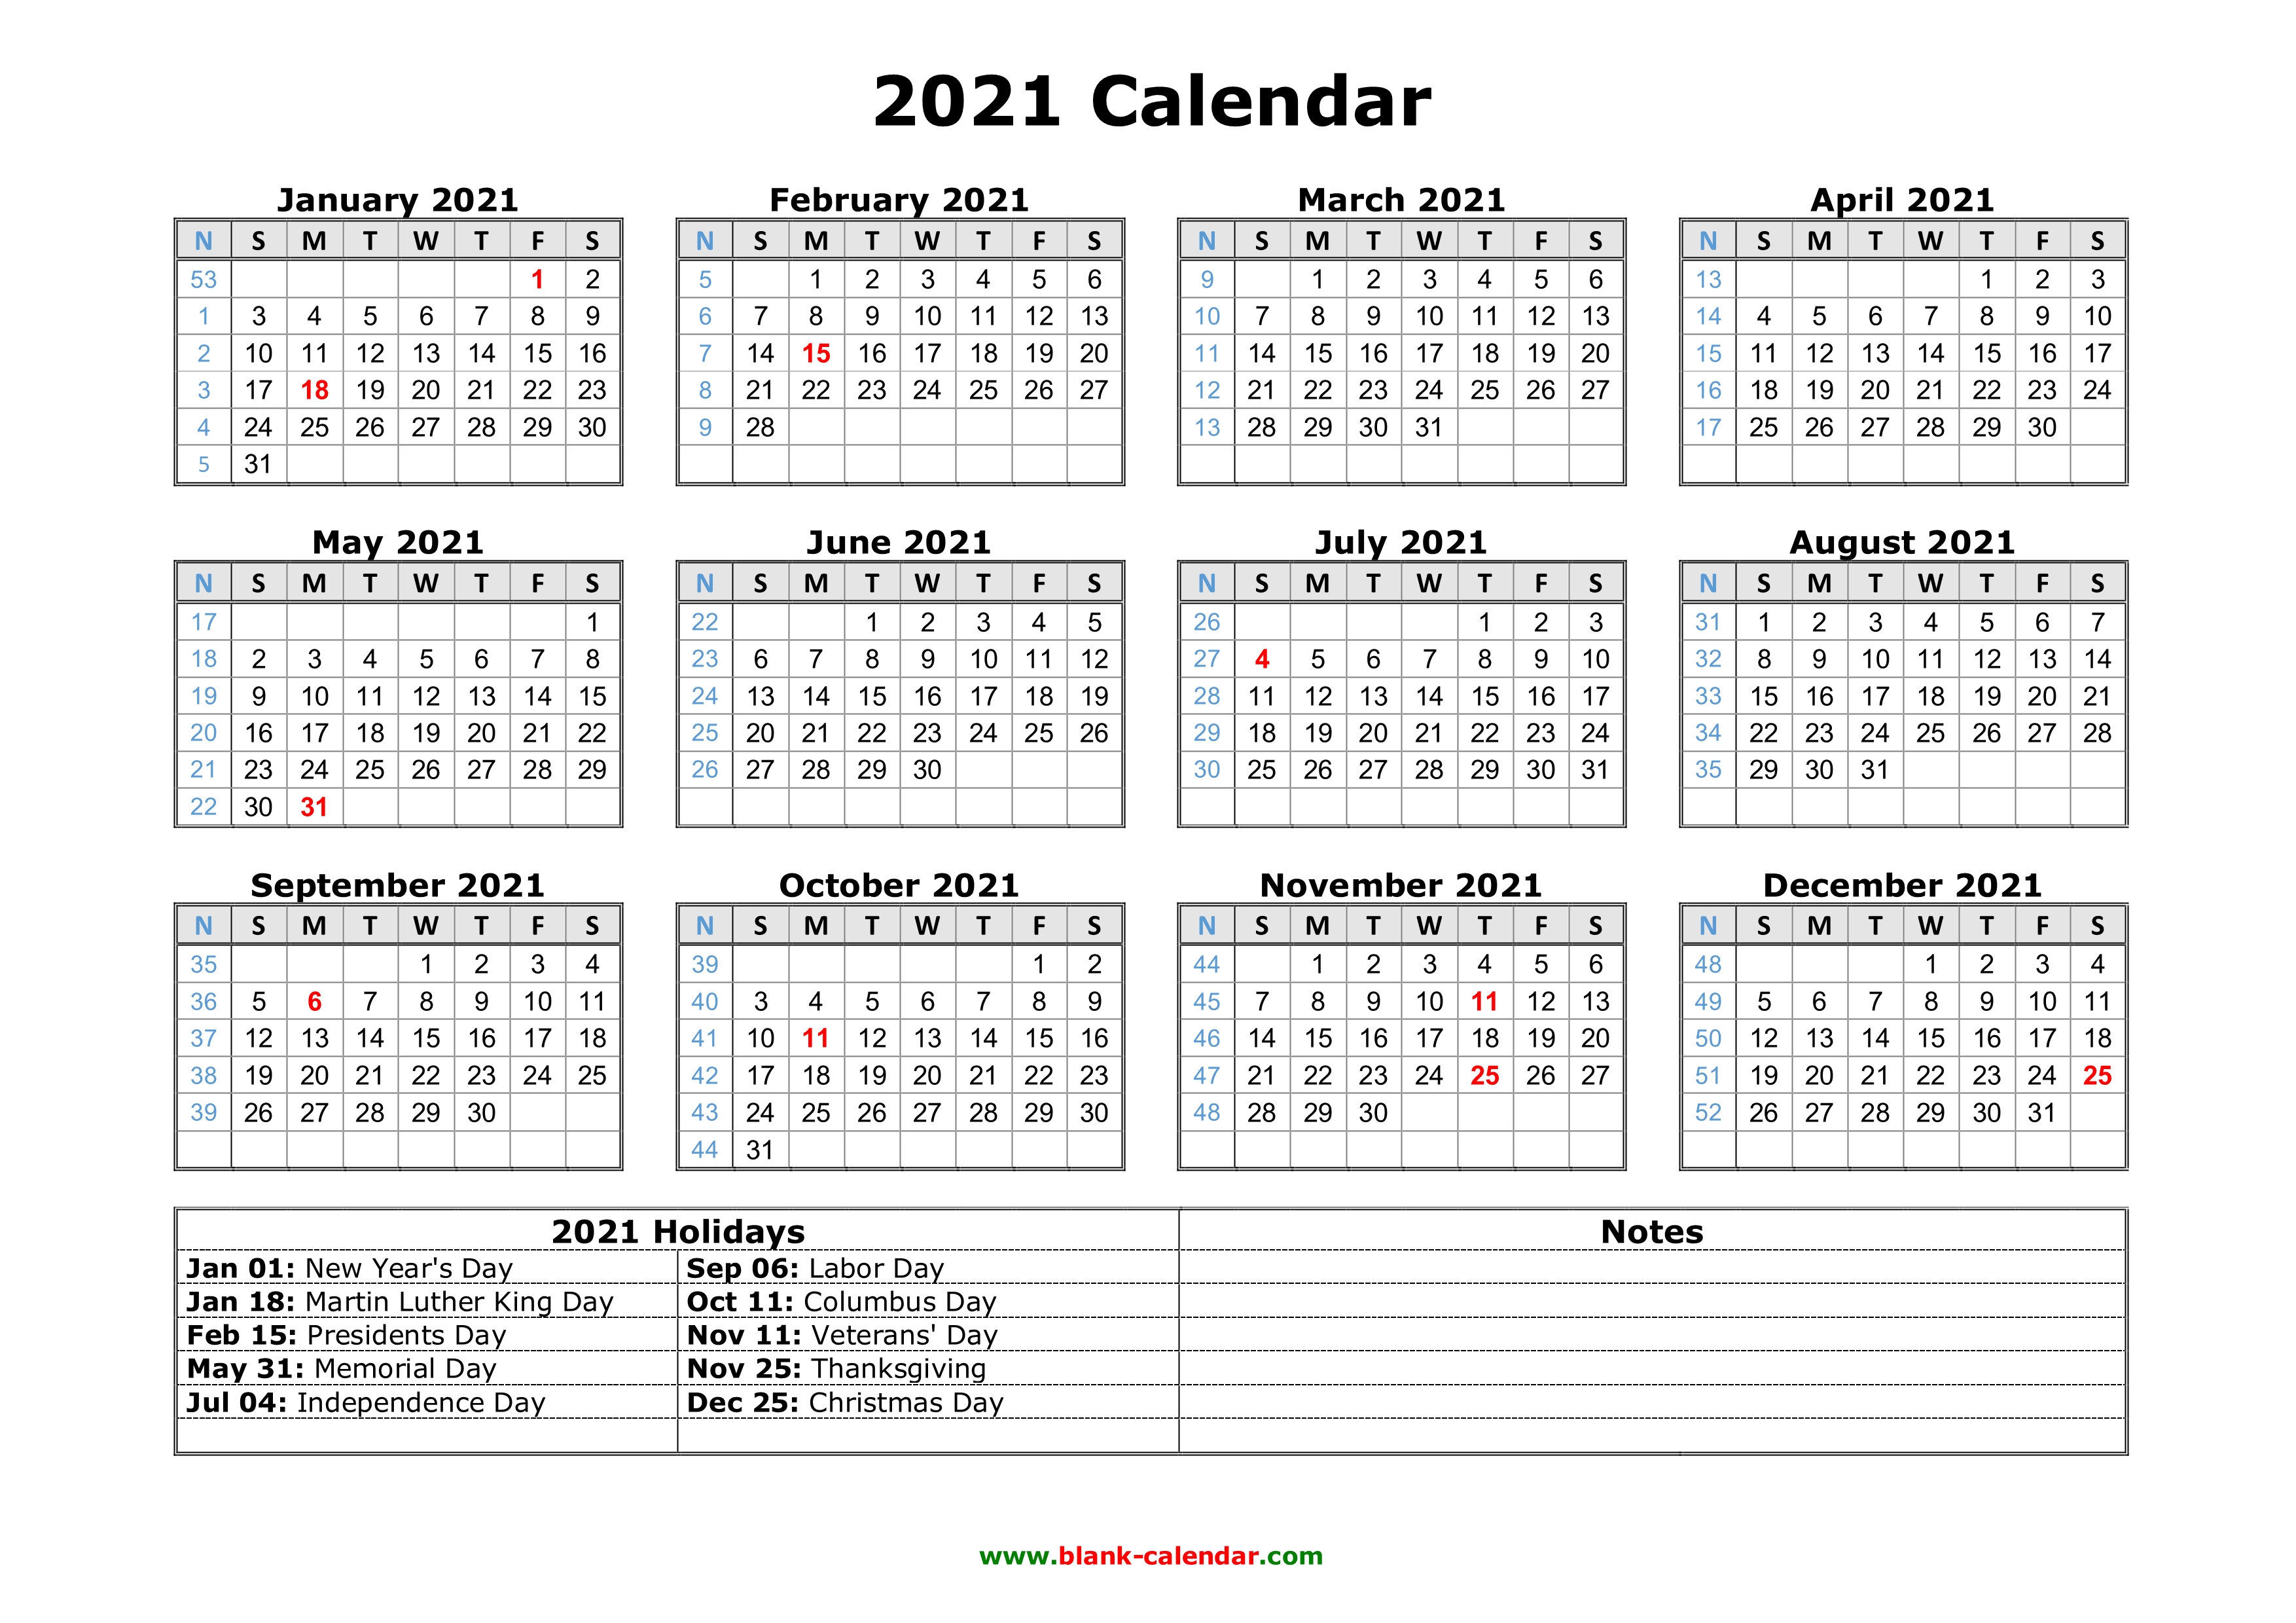 2021 Calendar With Us Federal Holidays | Calendar 2021